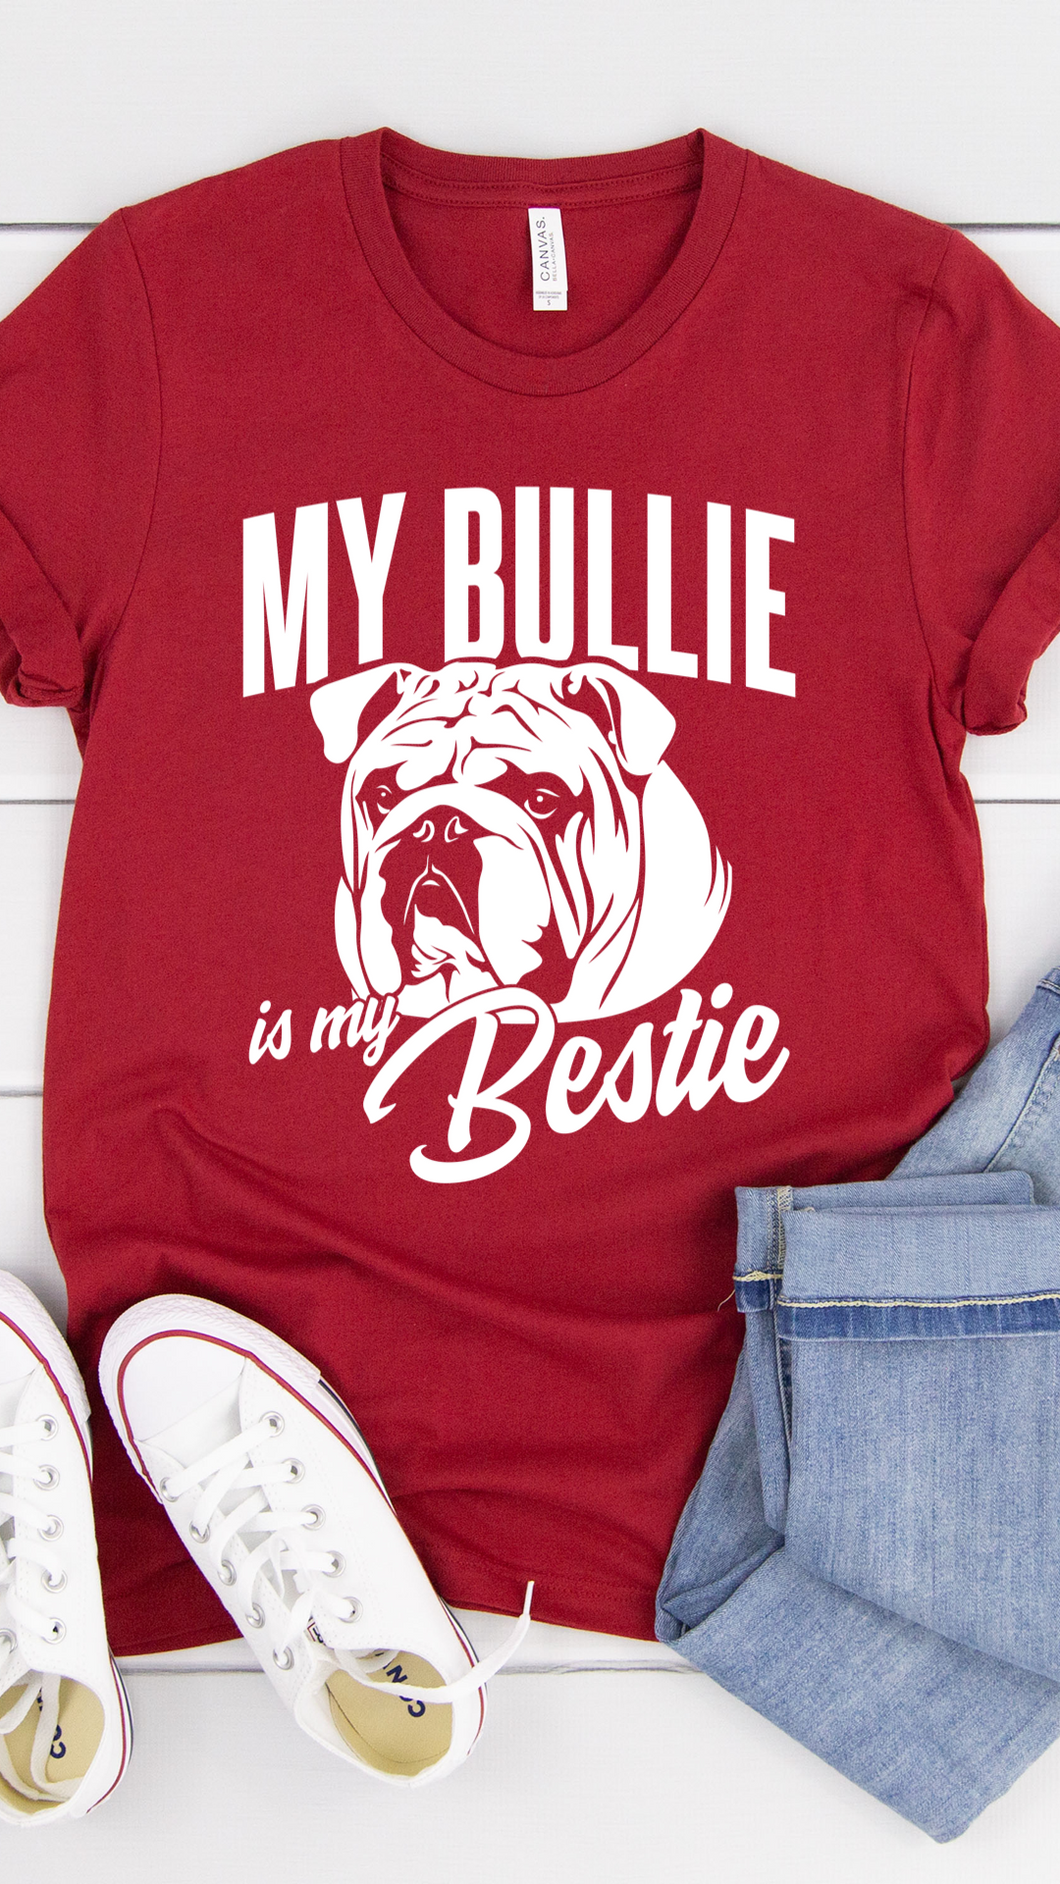 My Bullie is my Bestie